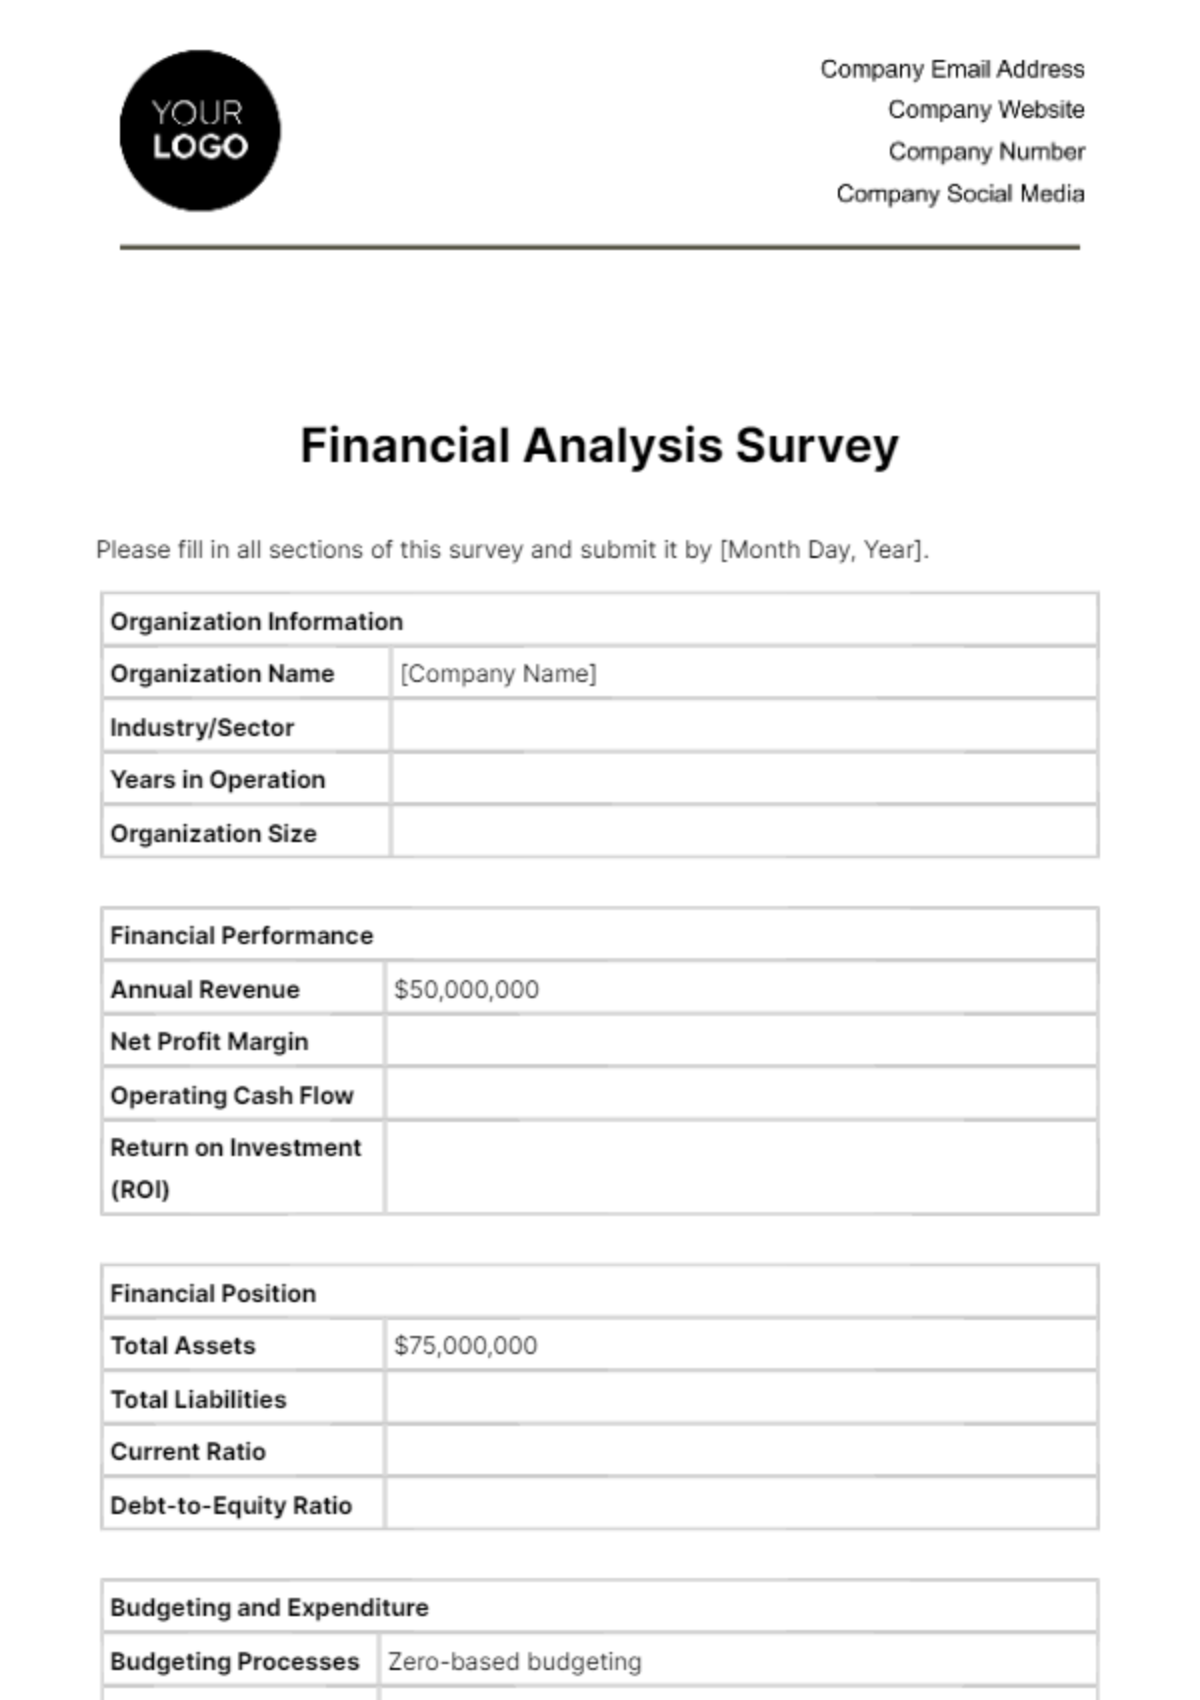 Financial Analysis Survey Template